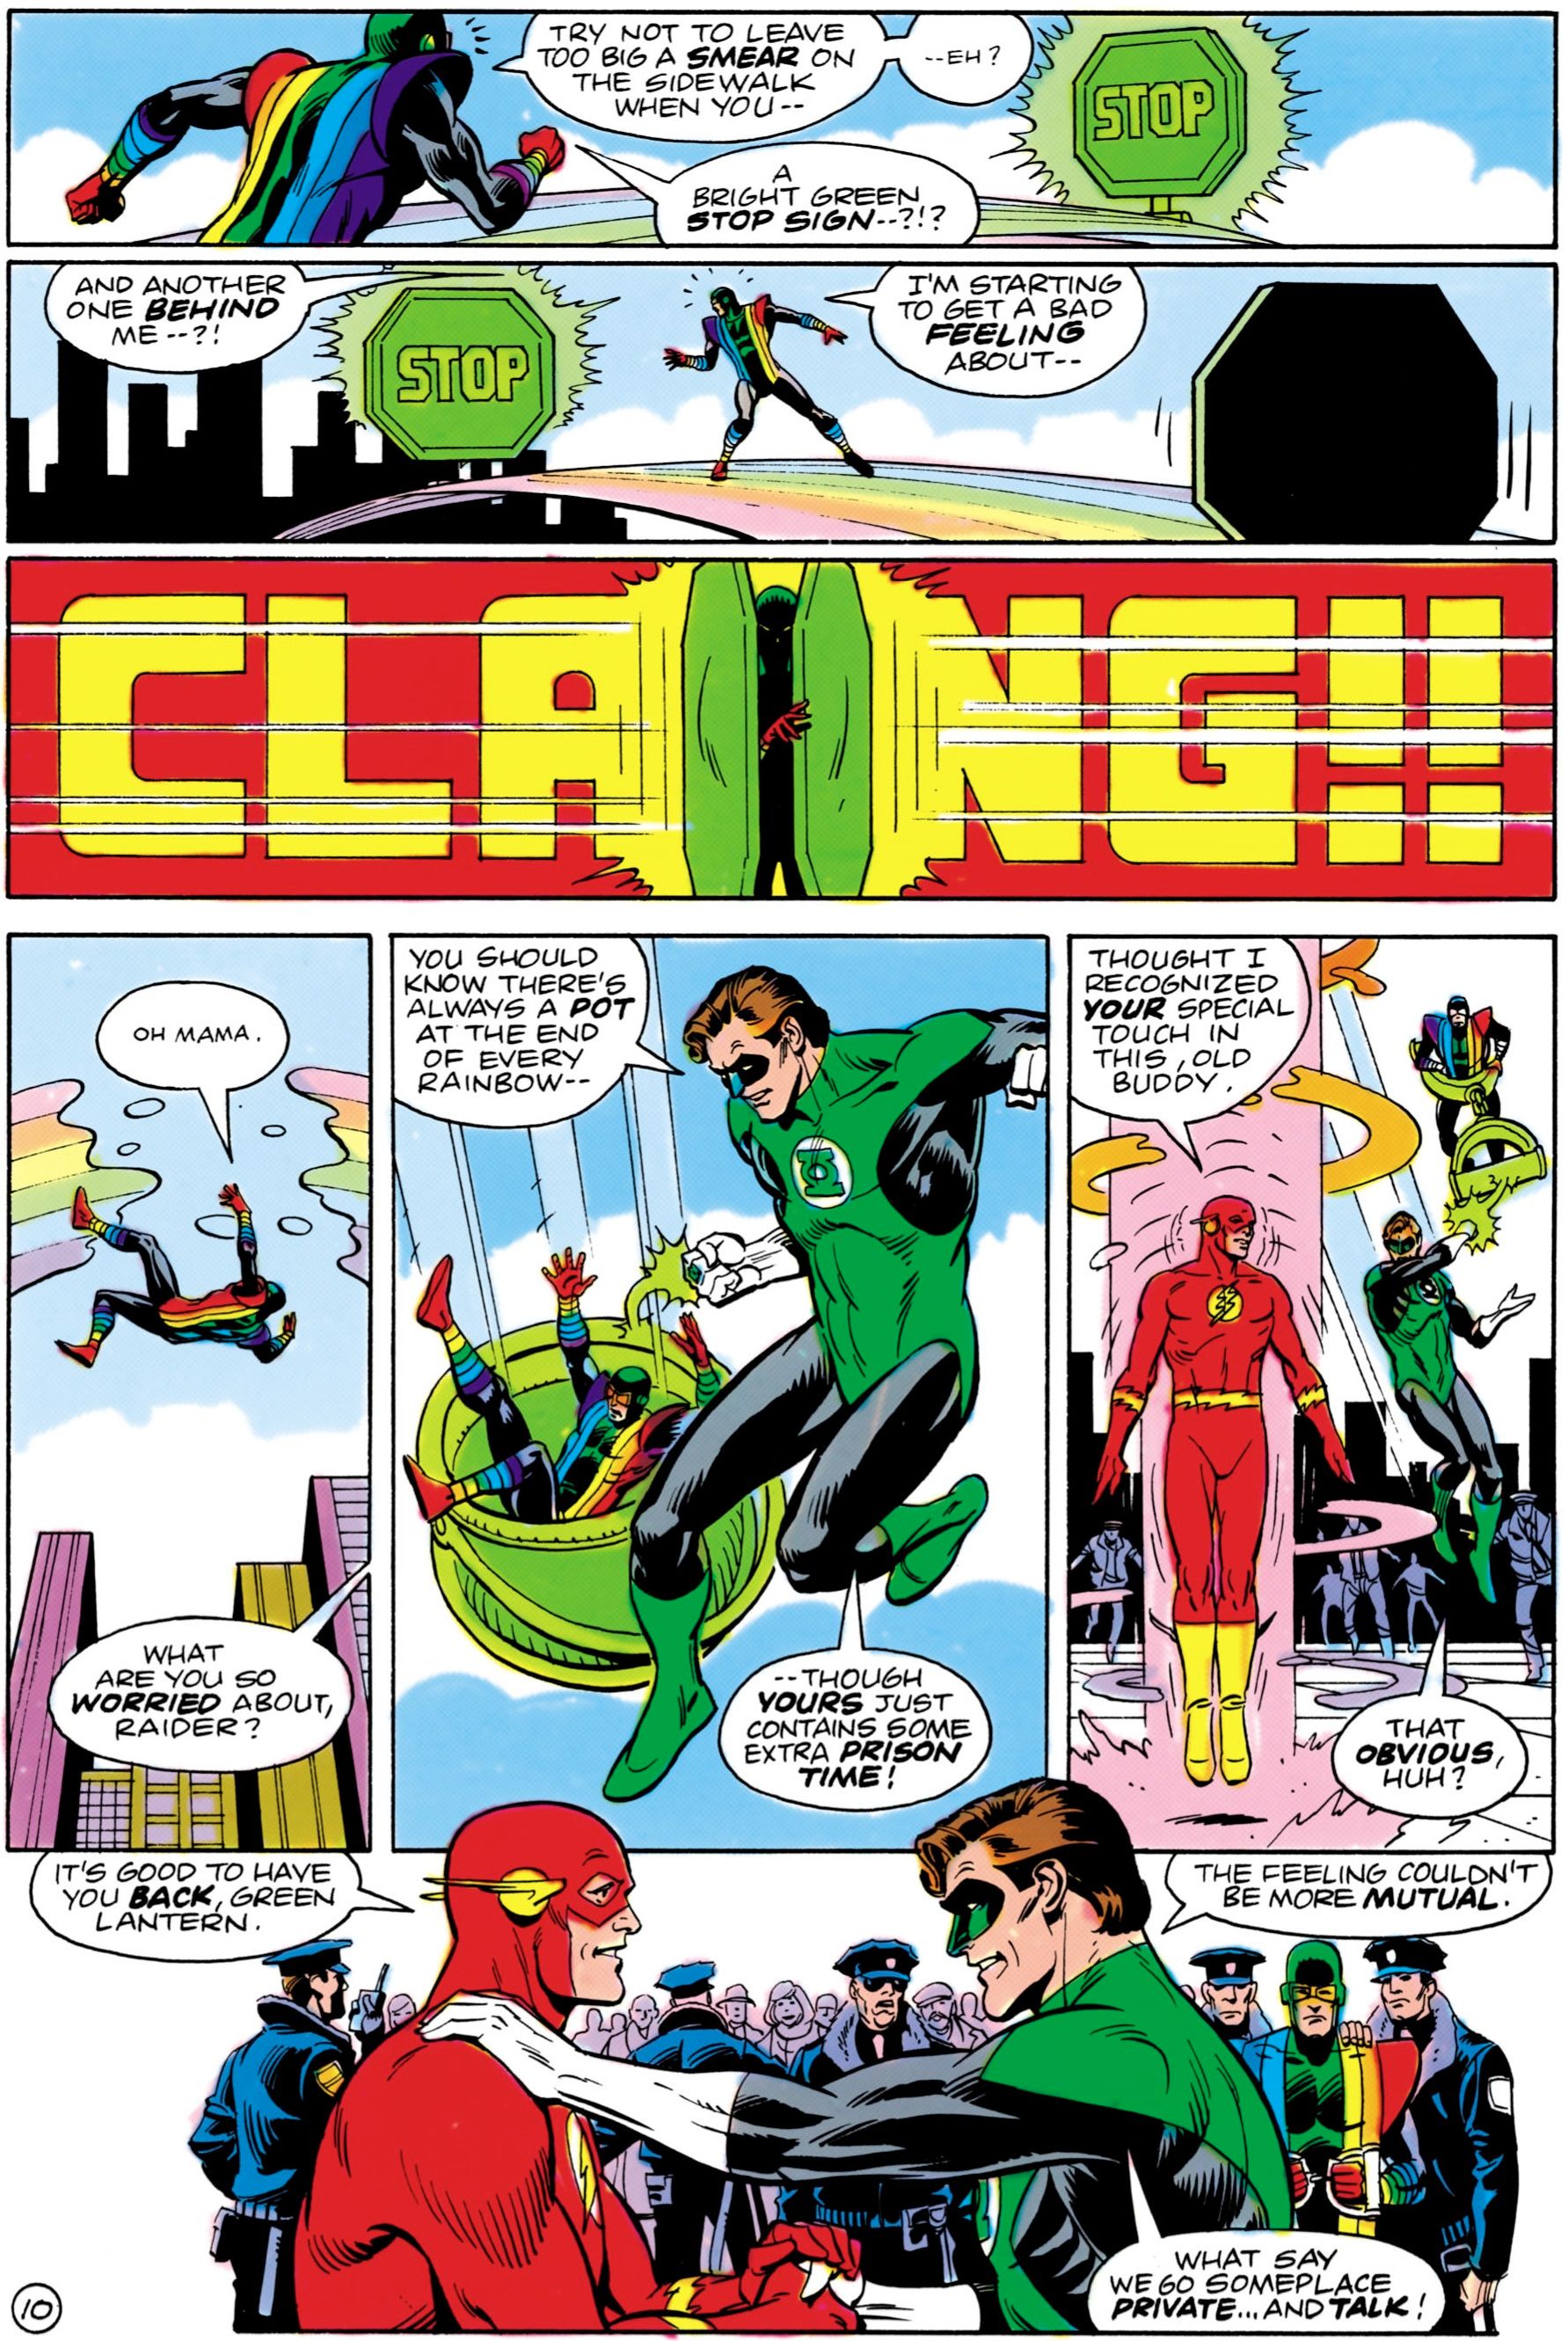 Flash and Green Lantern defeat the Rainbow Raider